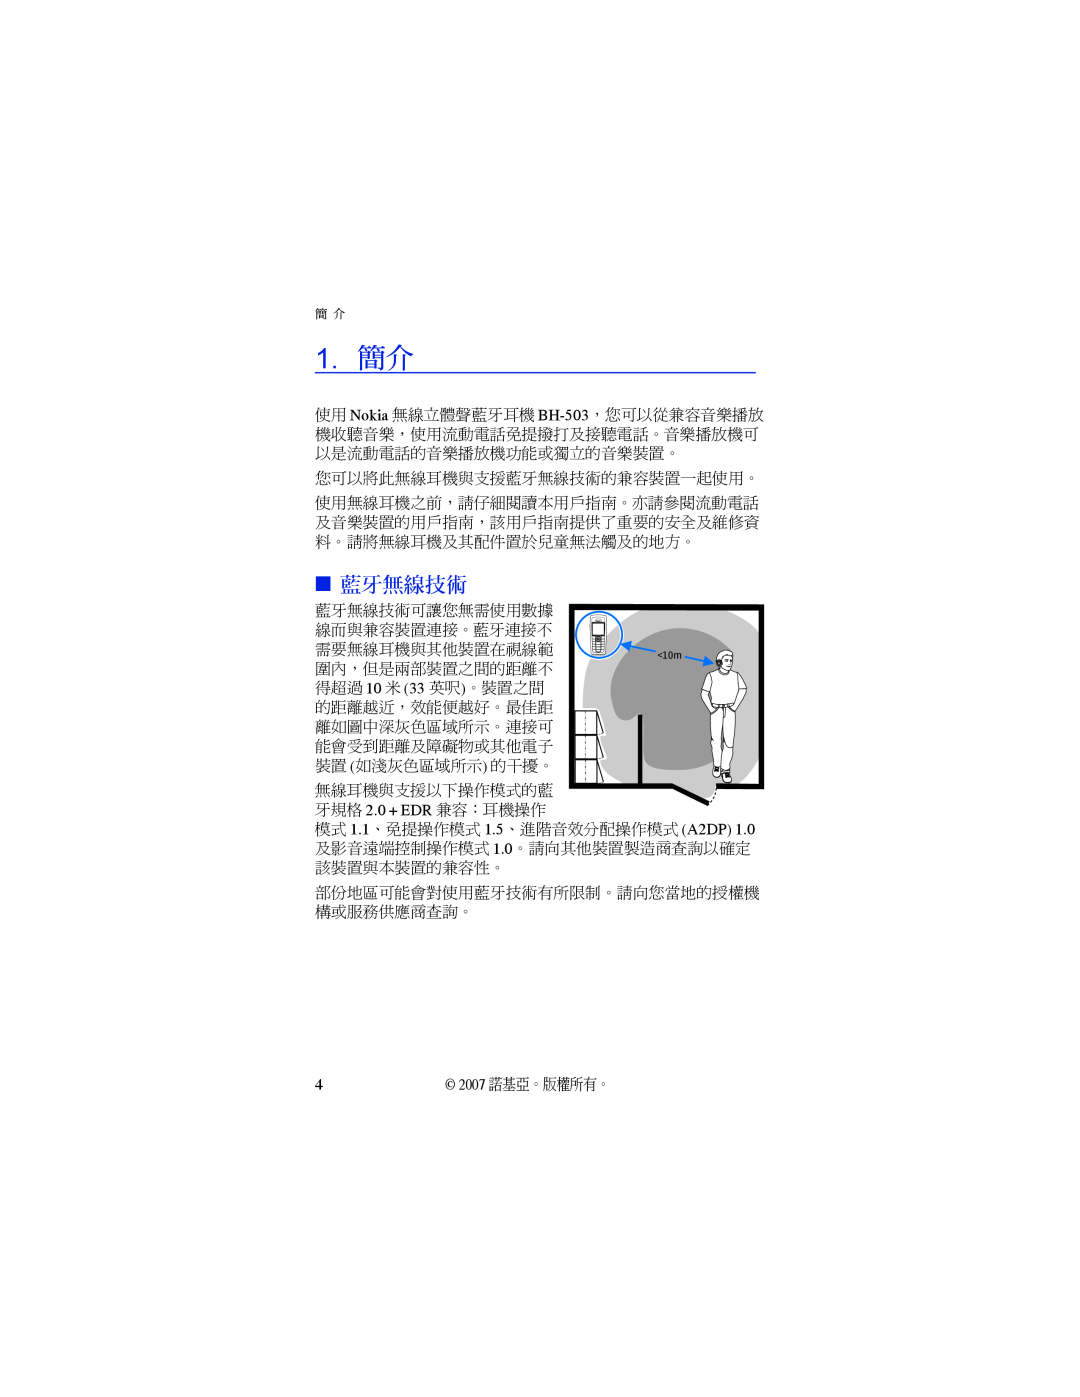 Nokia BH-503 manual 1.簡介, 藍牙無線技術 